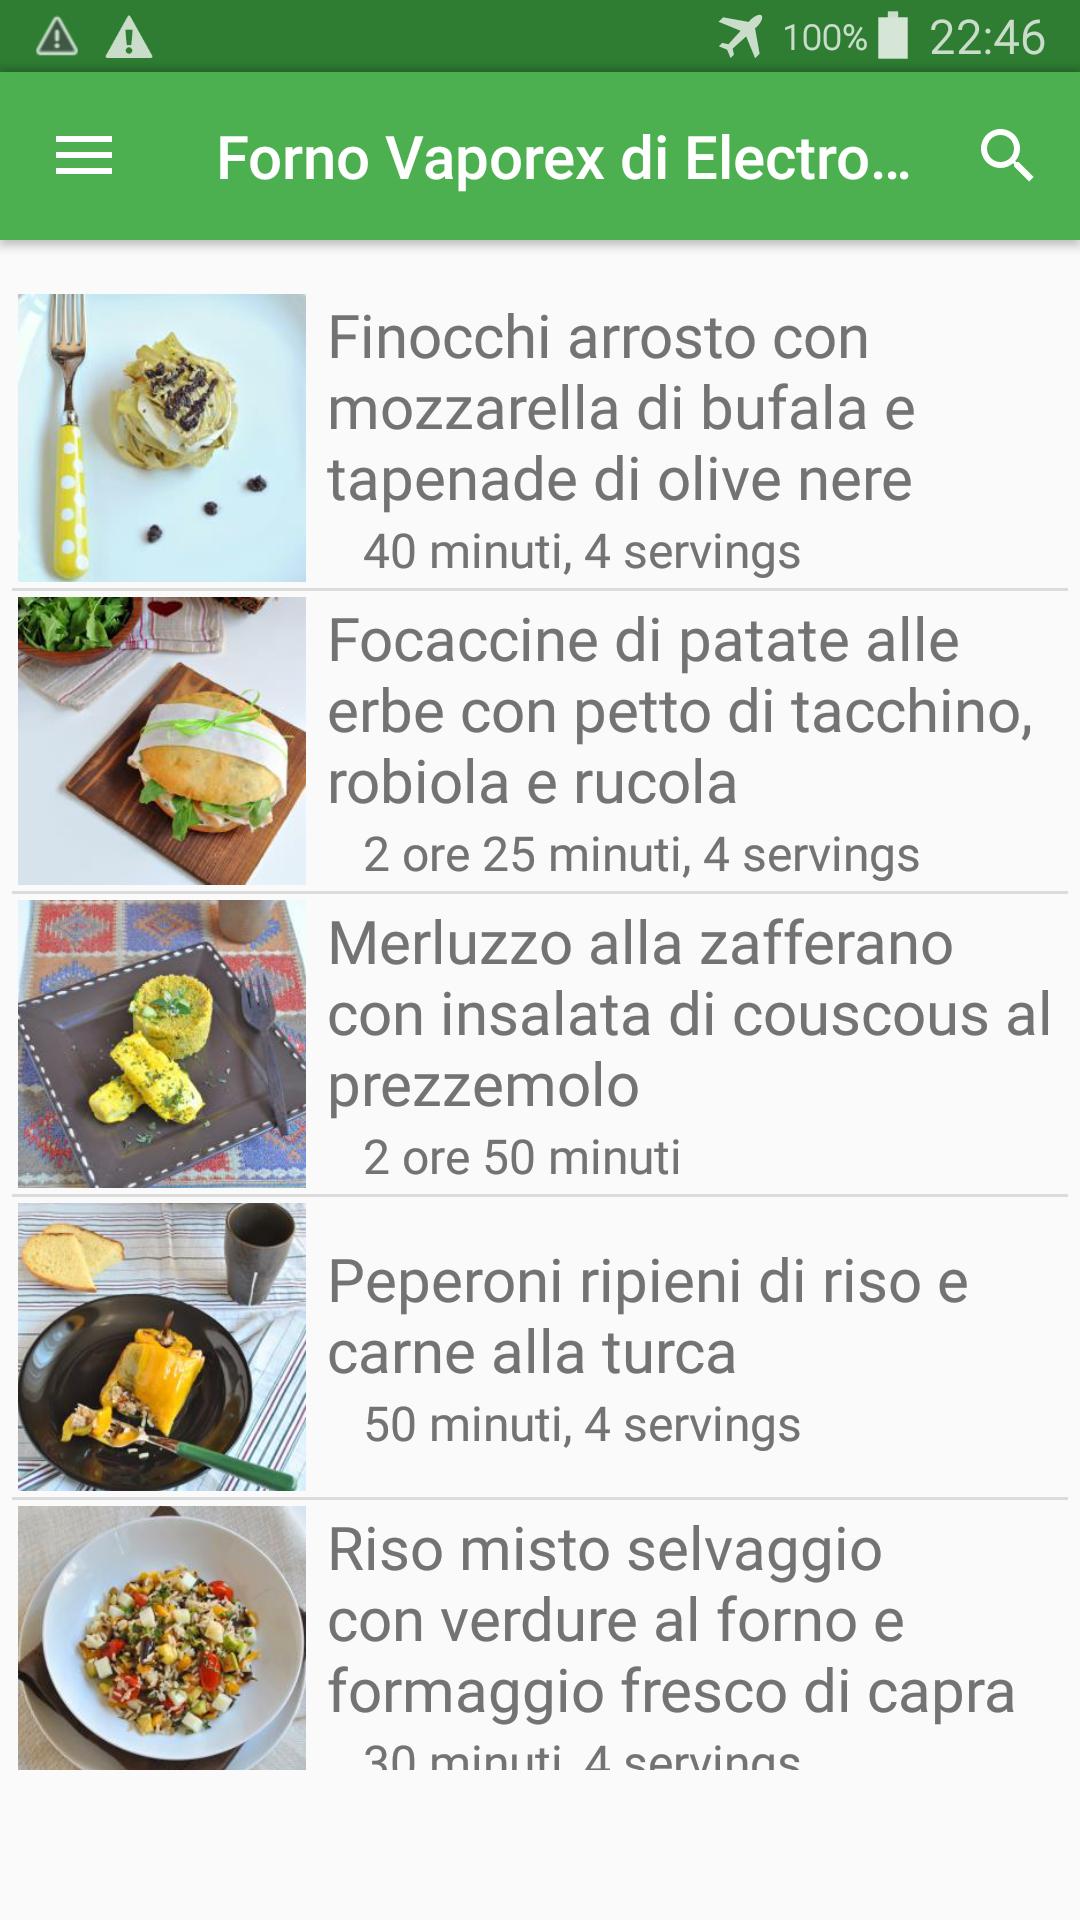 Forno Vaporex di Electrolux Rex ricette di cucina. APK for Android Download